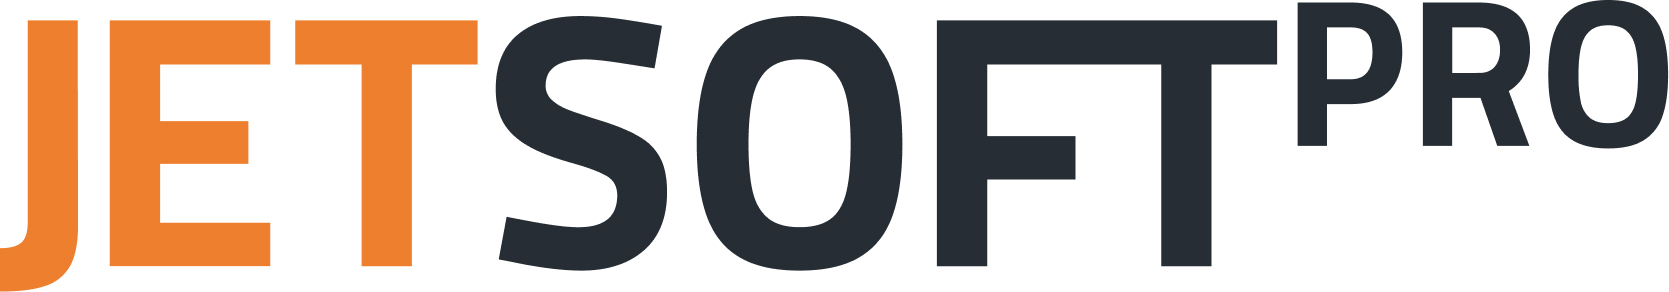 JetSoftPro company logo